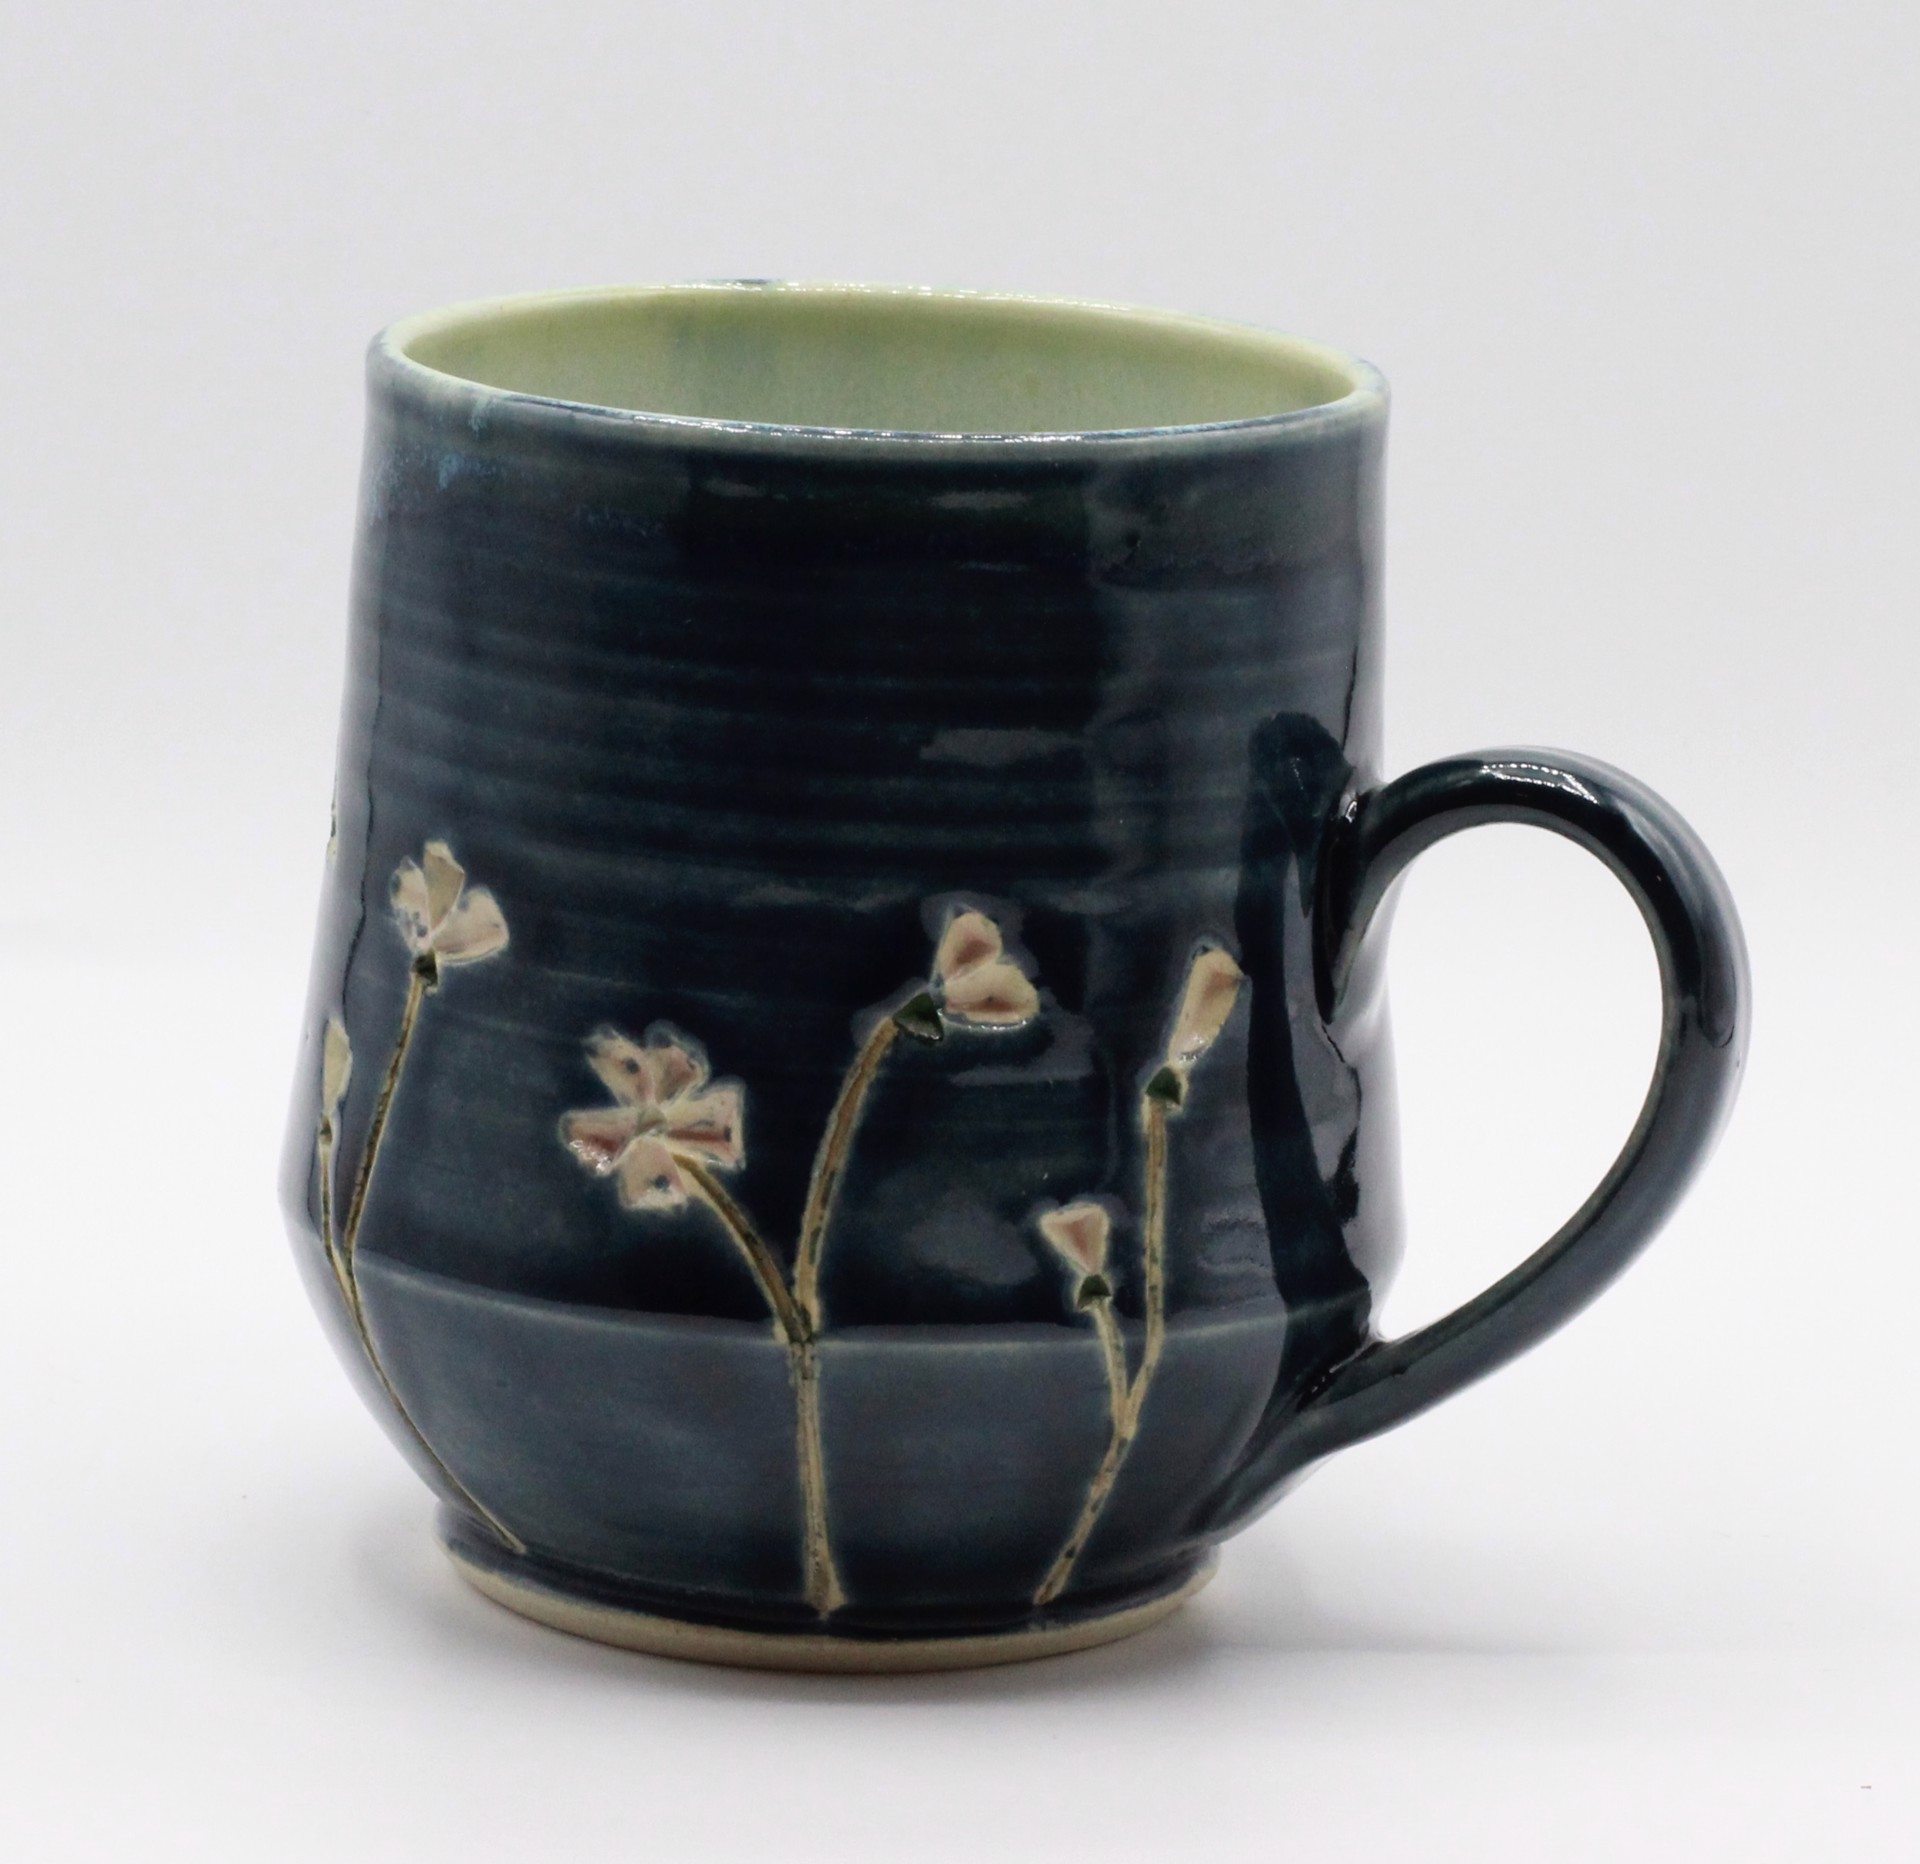 Flower Mug by Katie Redfield